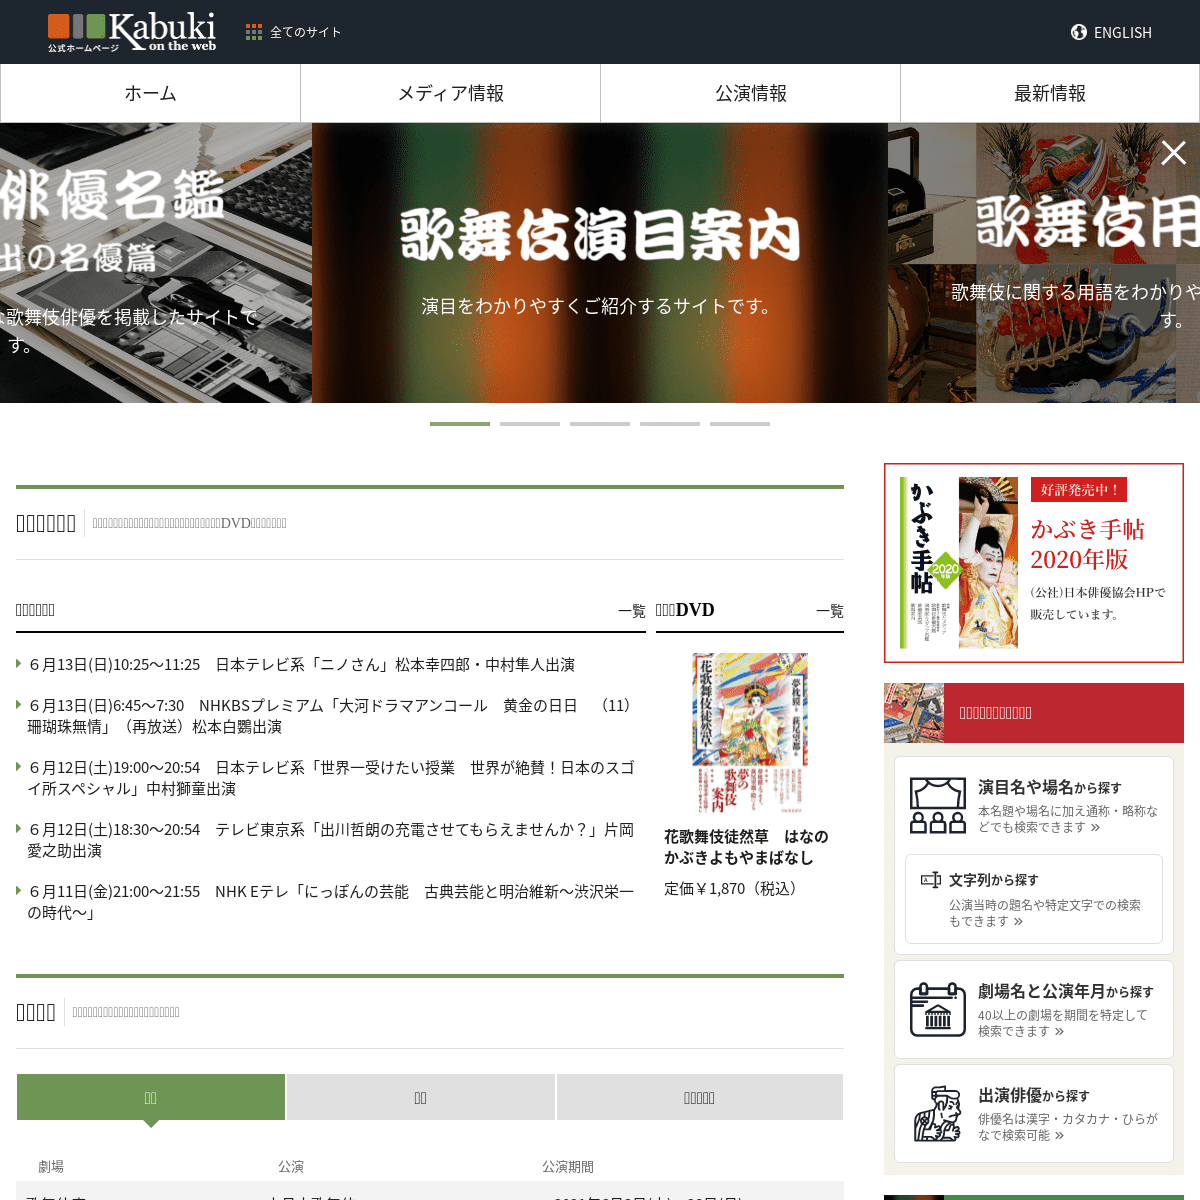 A complete backup of https://kabuki.ne.jp